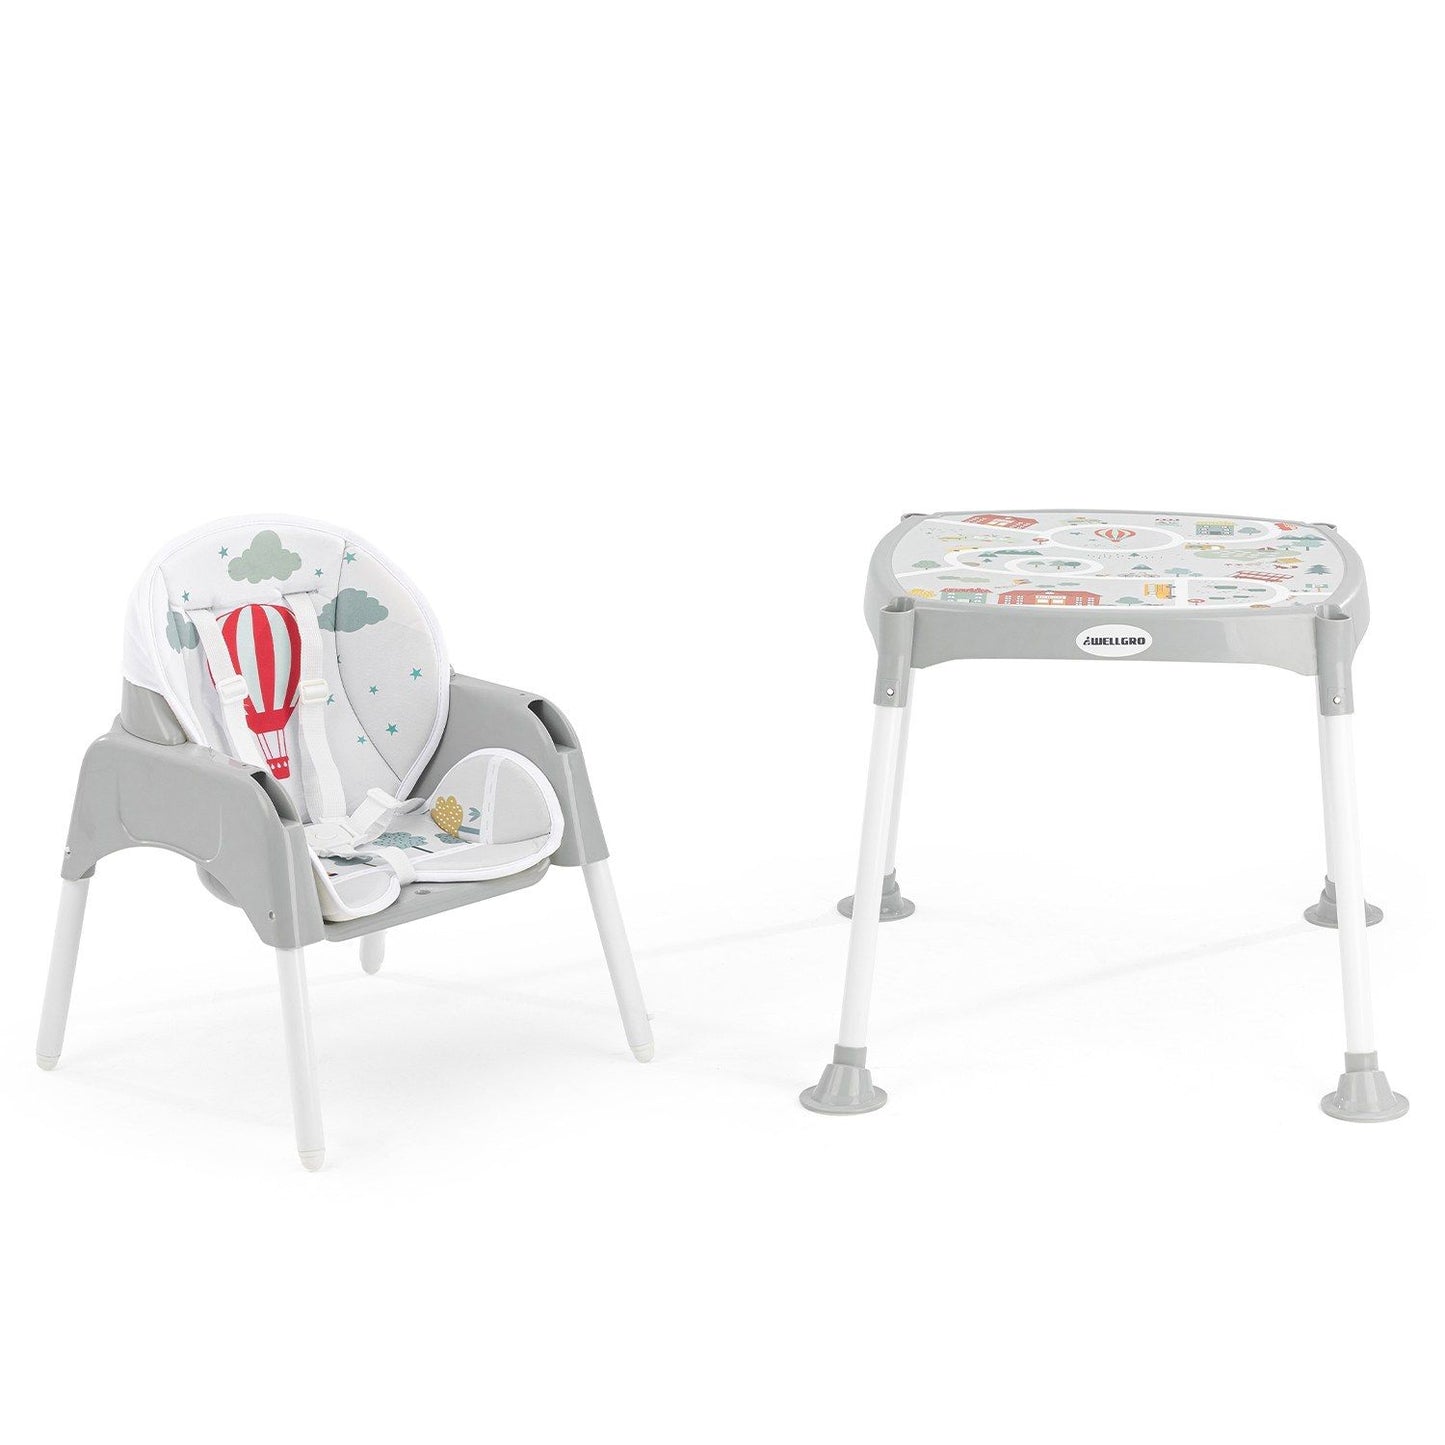 RoadMap - Baby's Chair